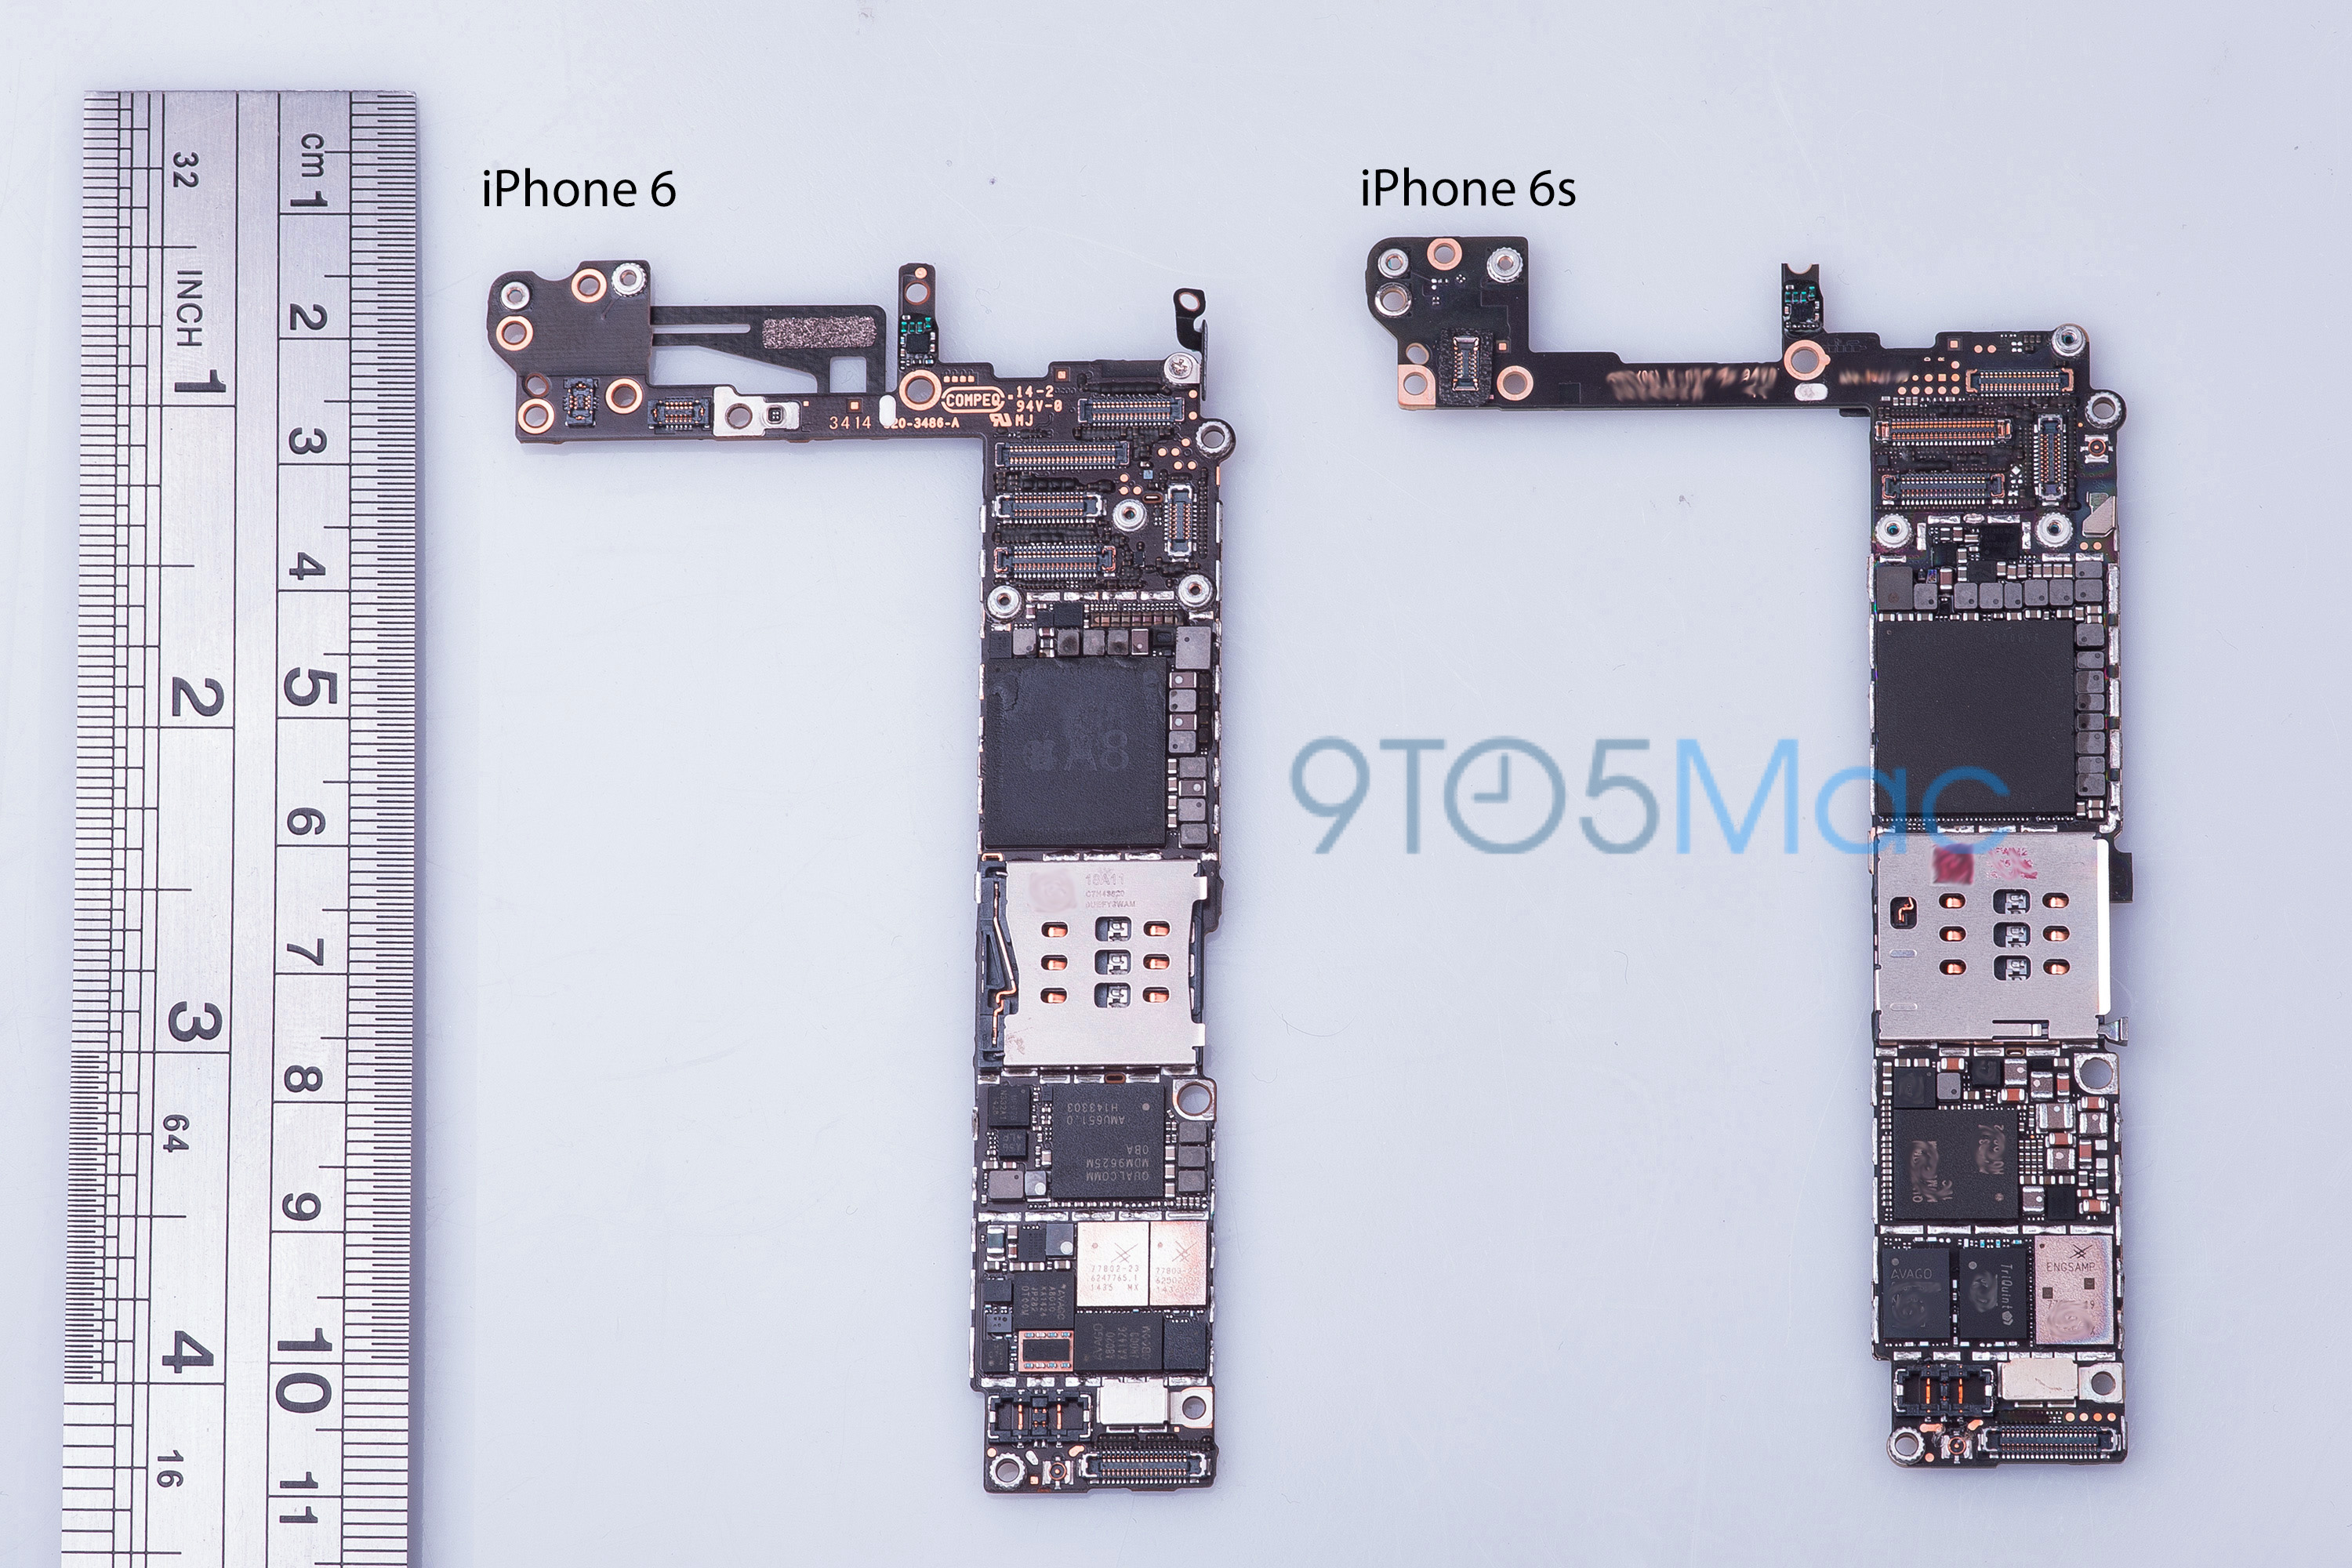 middernacht onderdelen Recensent New iPhone 6S images show updated NFC, 16GB base storage, fewer chips +  design tweaks - 9to5Mac